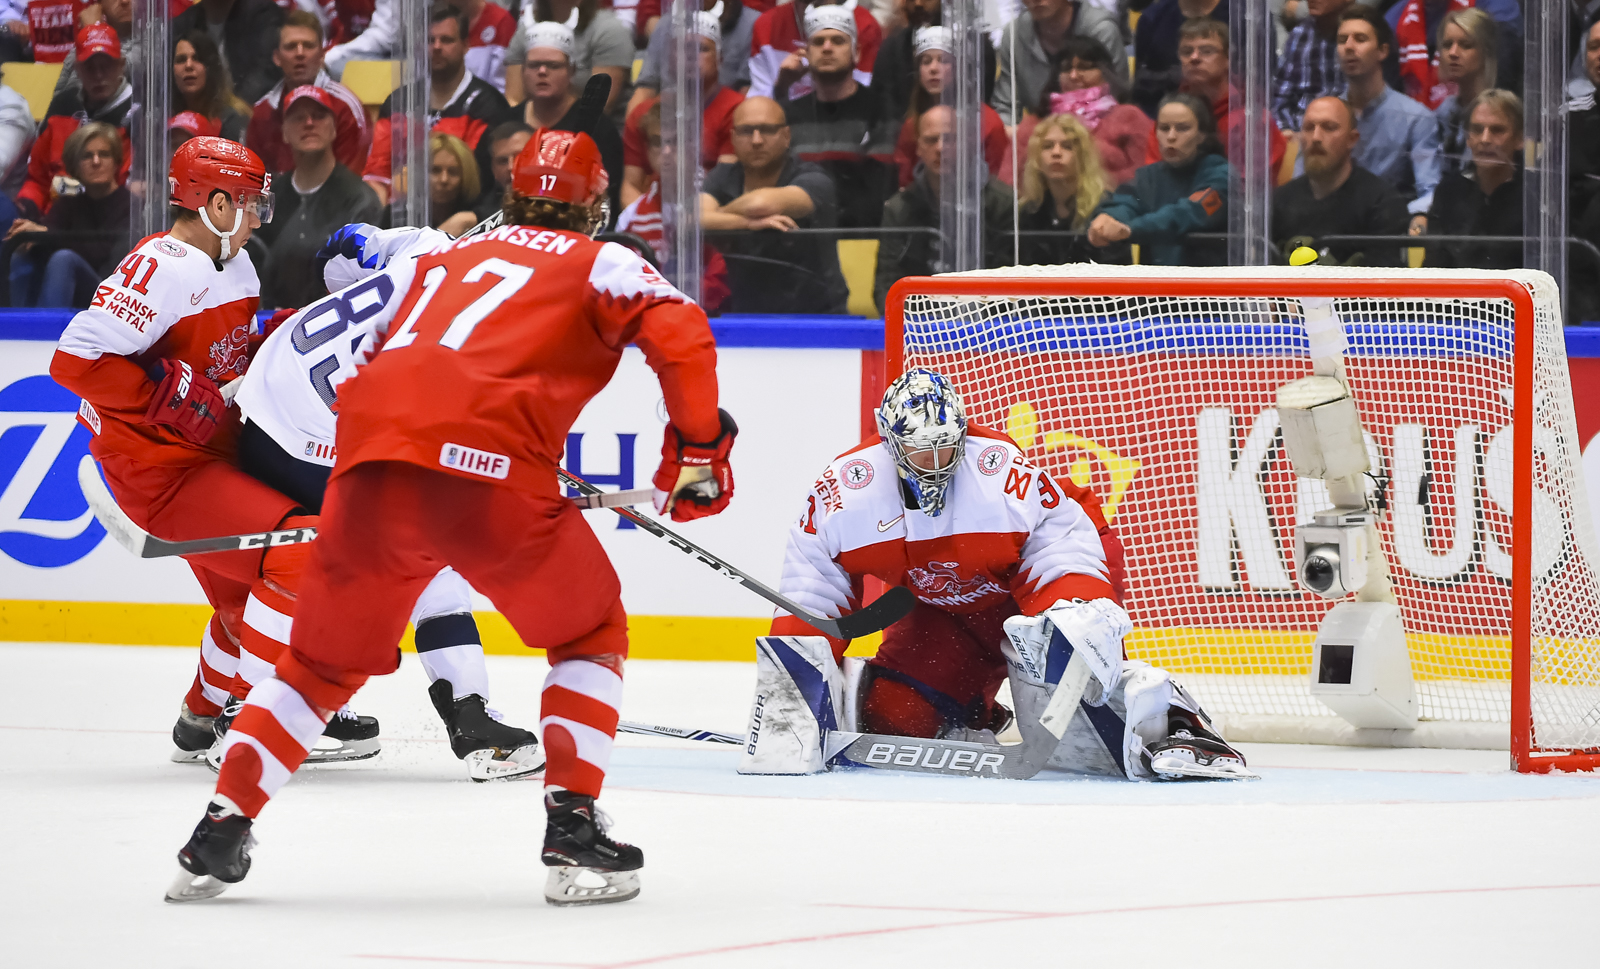 IIHF - Gallery: Denmark vs. USA